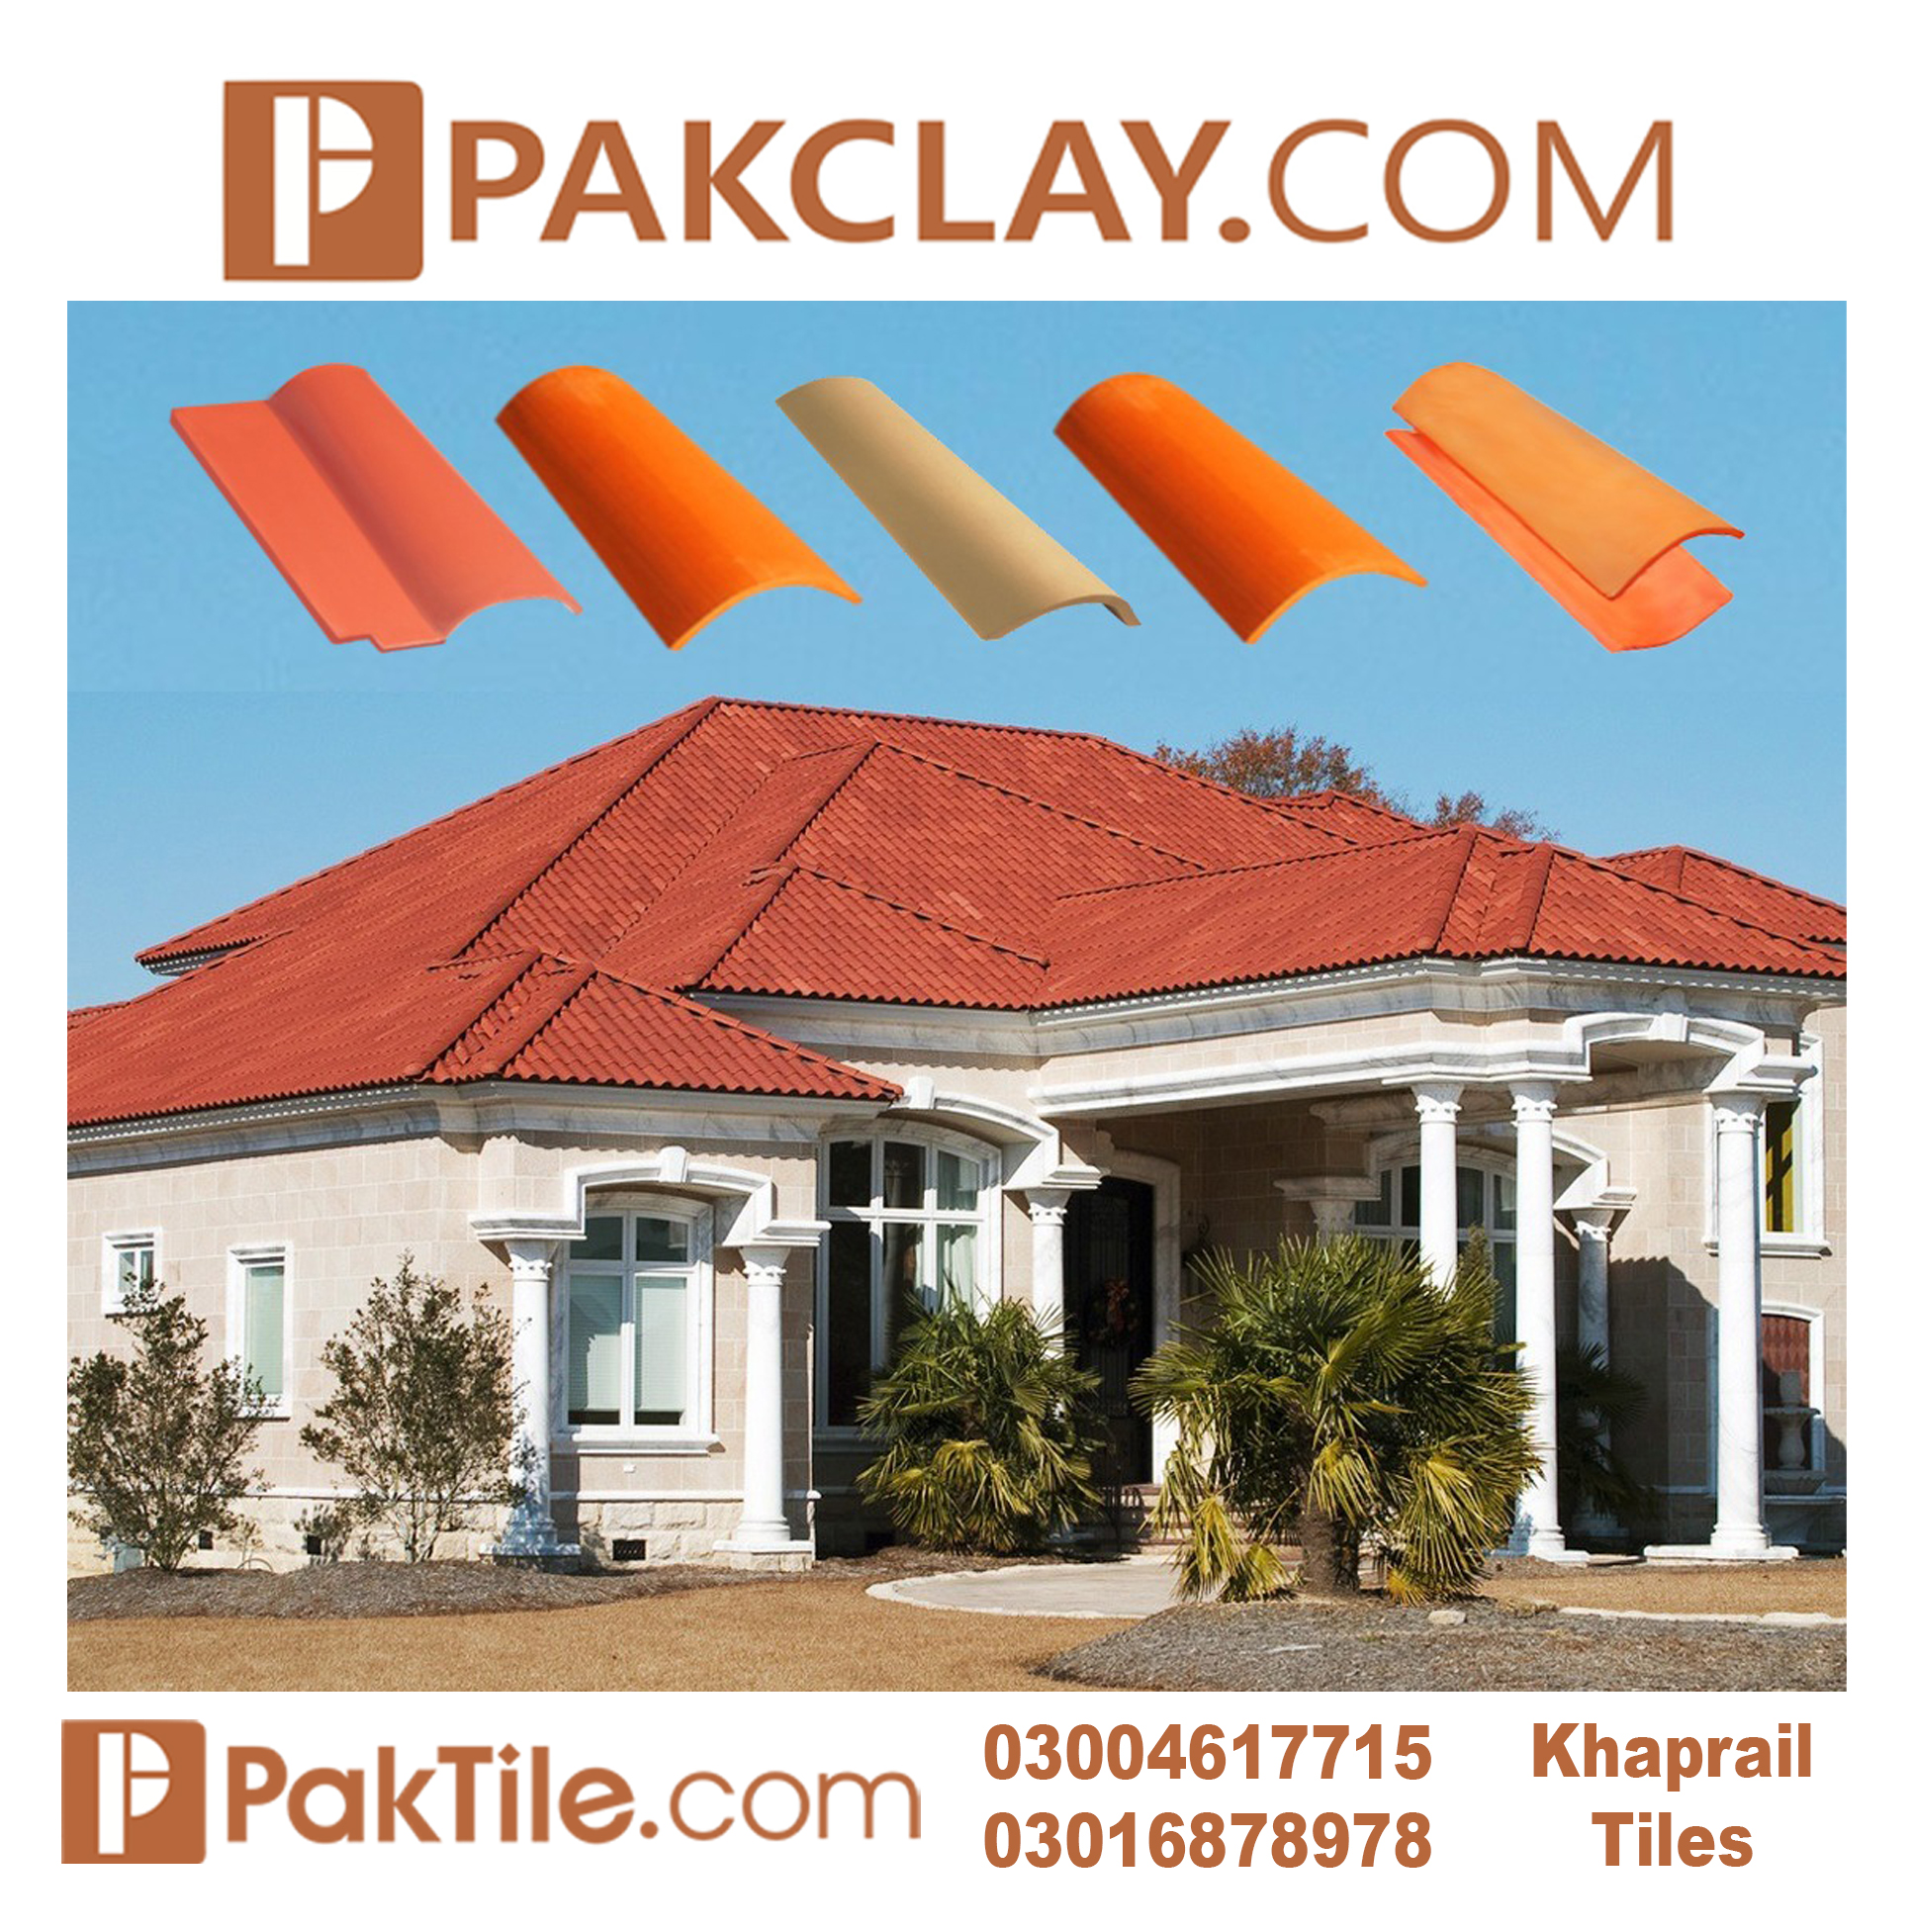 Clay khaprail tiles design in pakistan